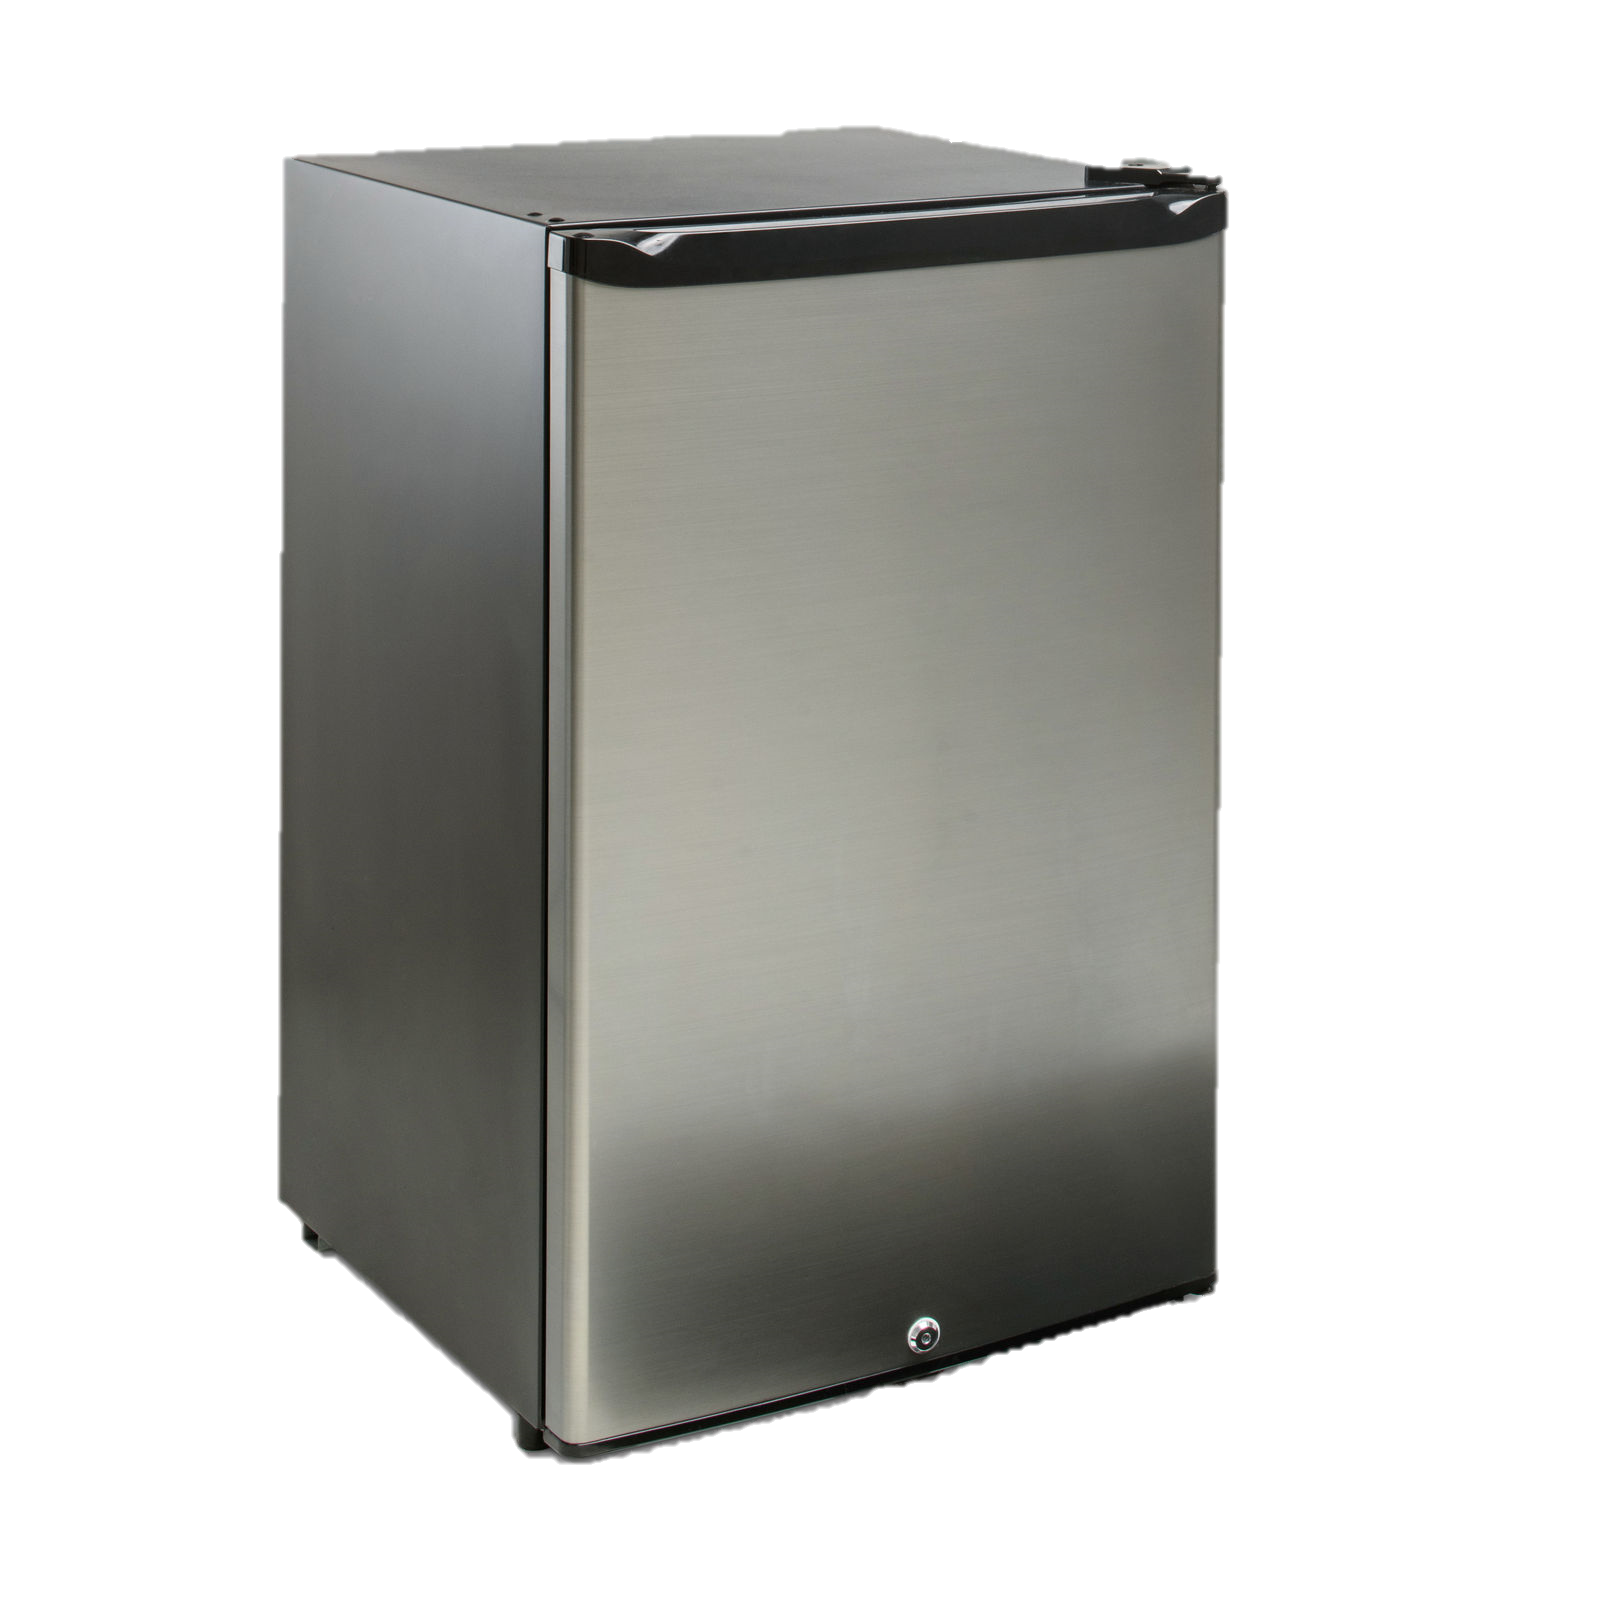 4.4 CU FT Outdoor Compact Refrigerator